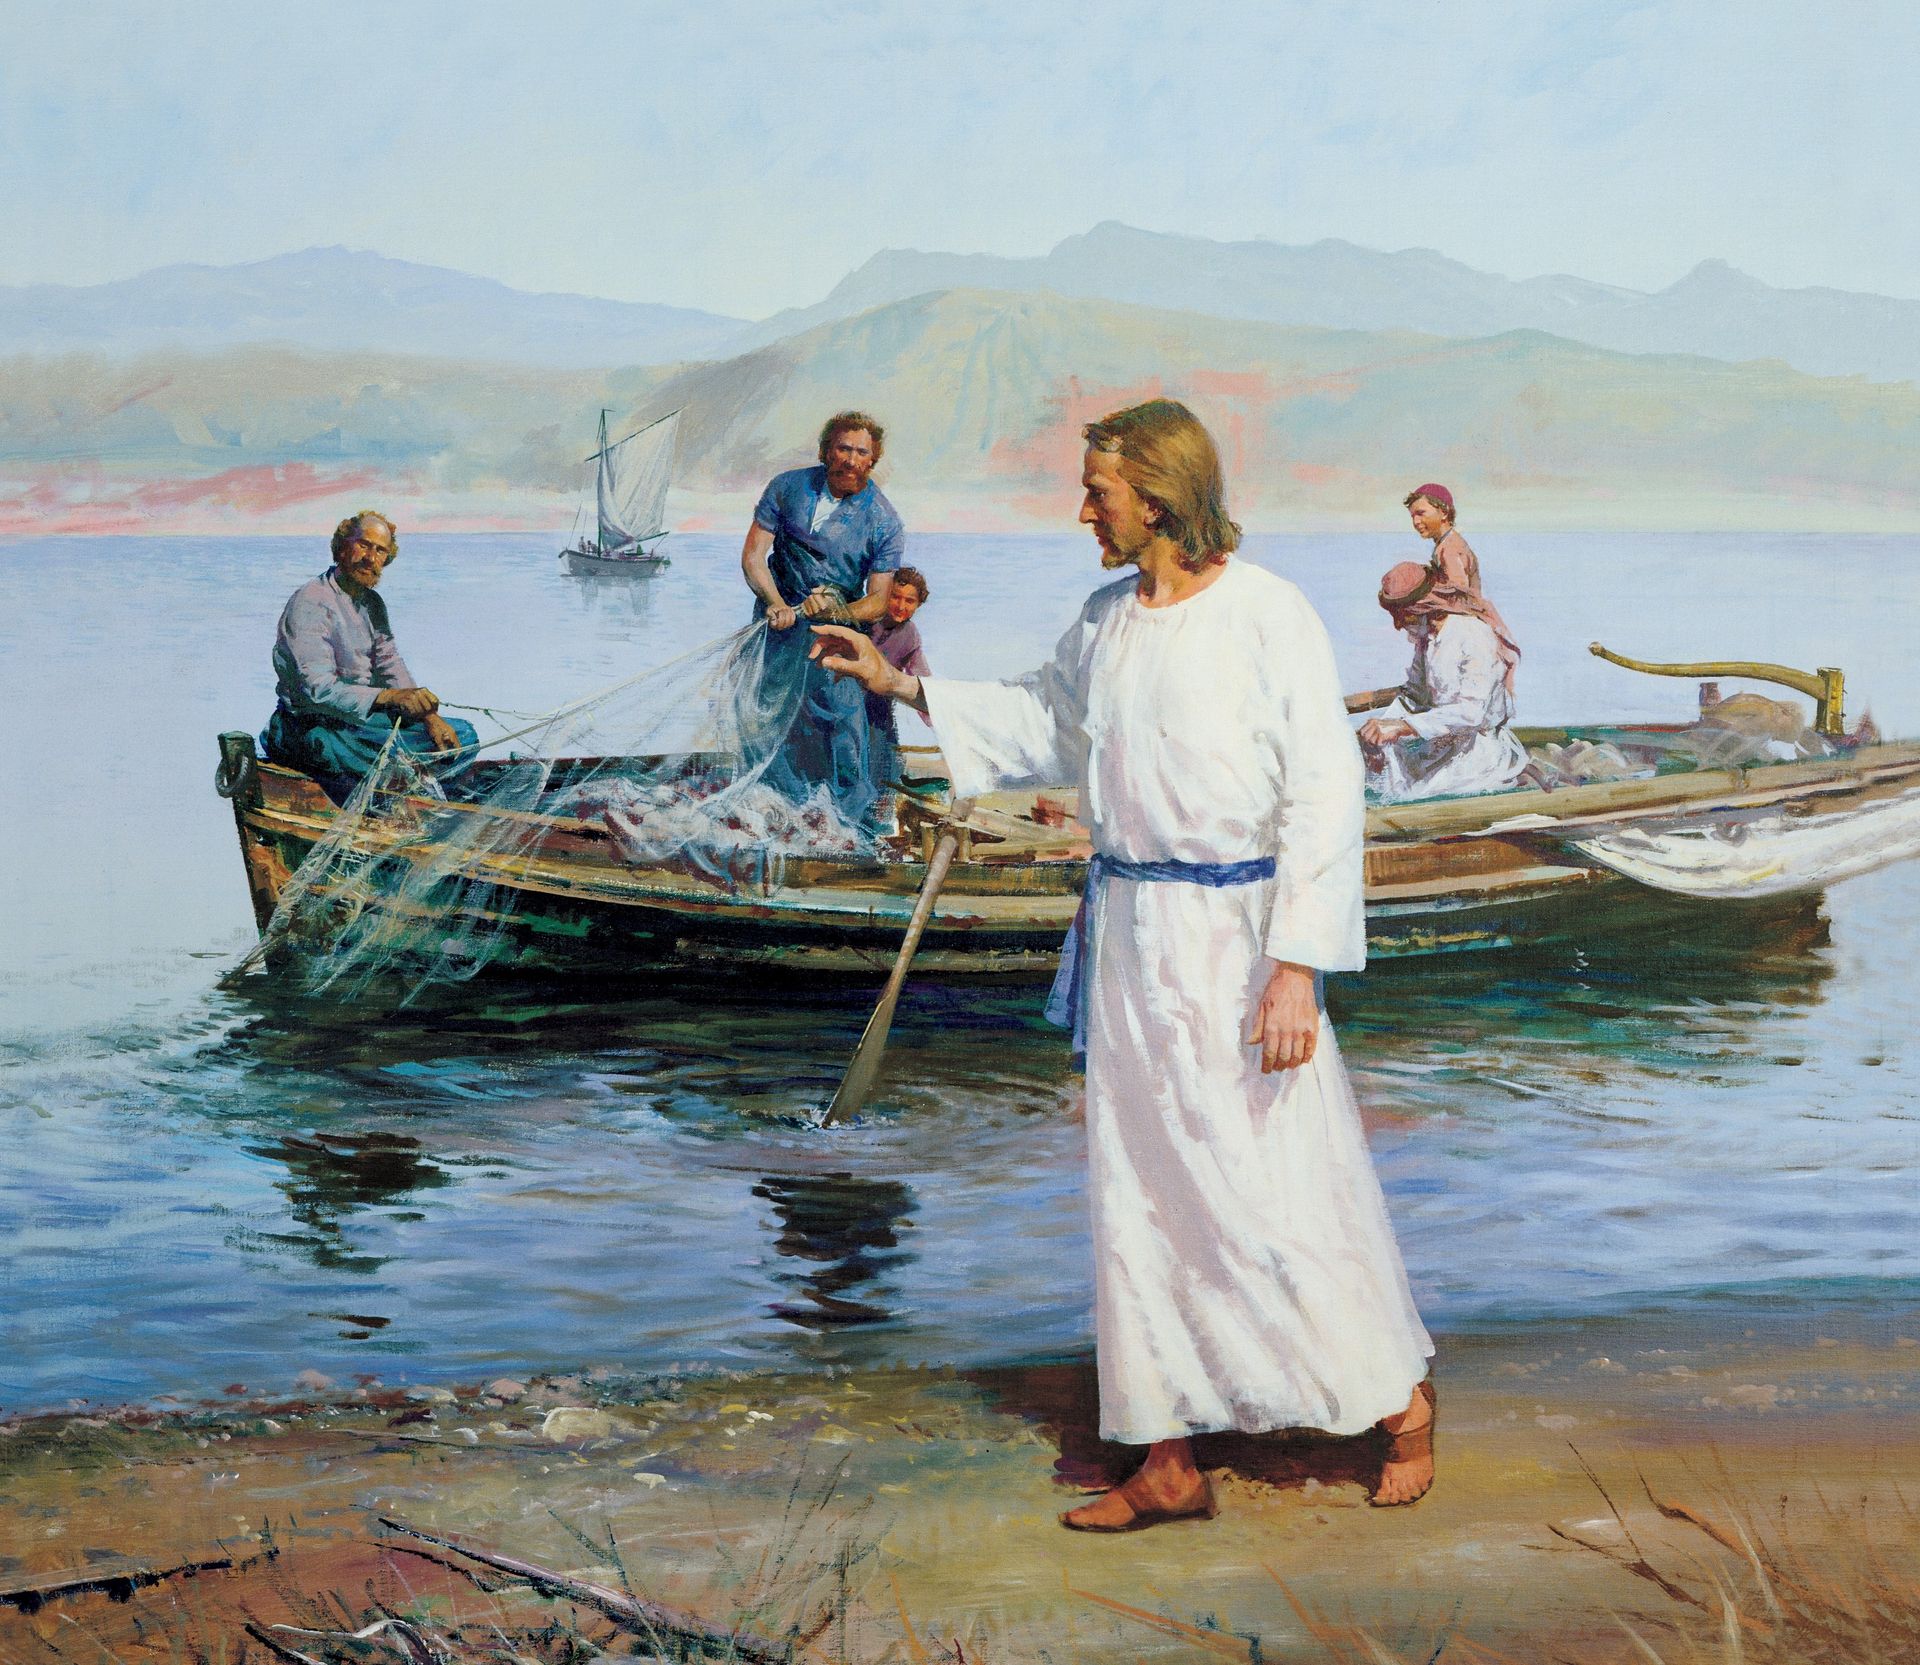 De roeping van de vissers (Christus roept Petrus en Andreas)